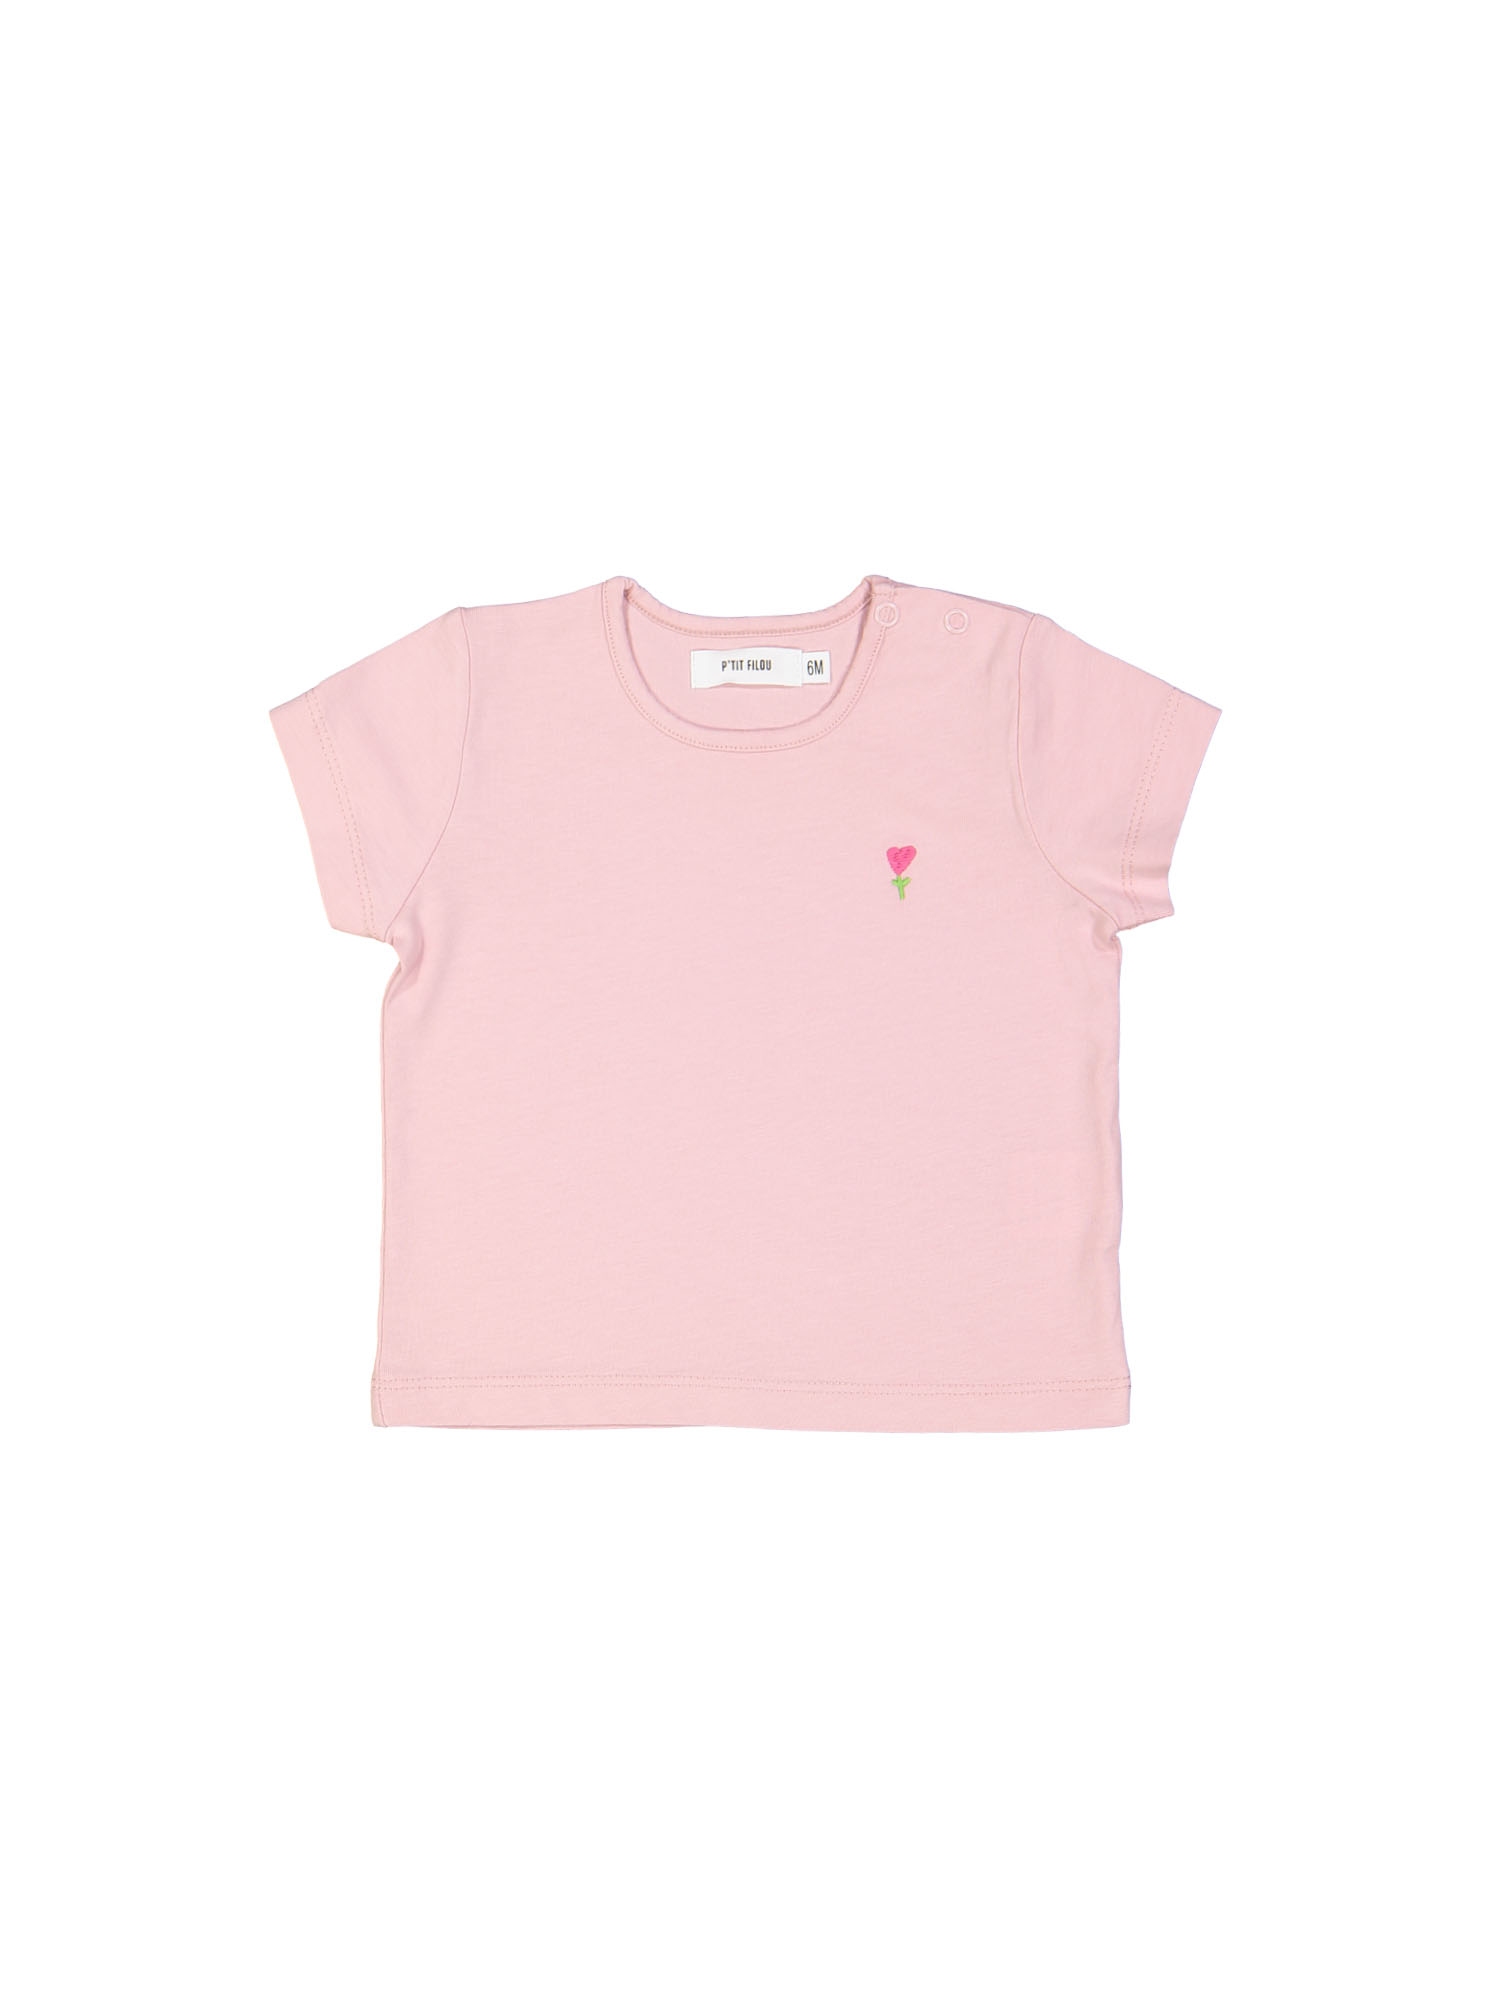 T-shirt mini love flower roze 03m